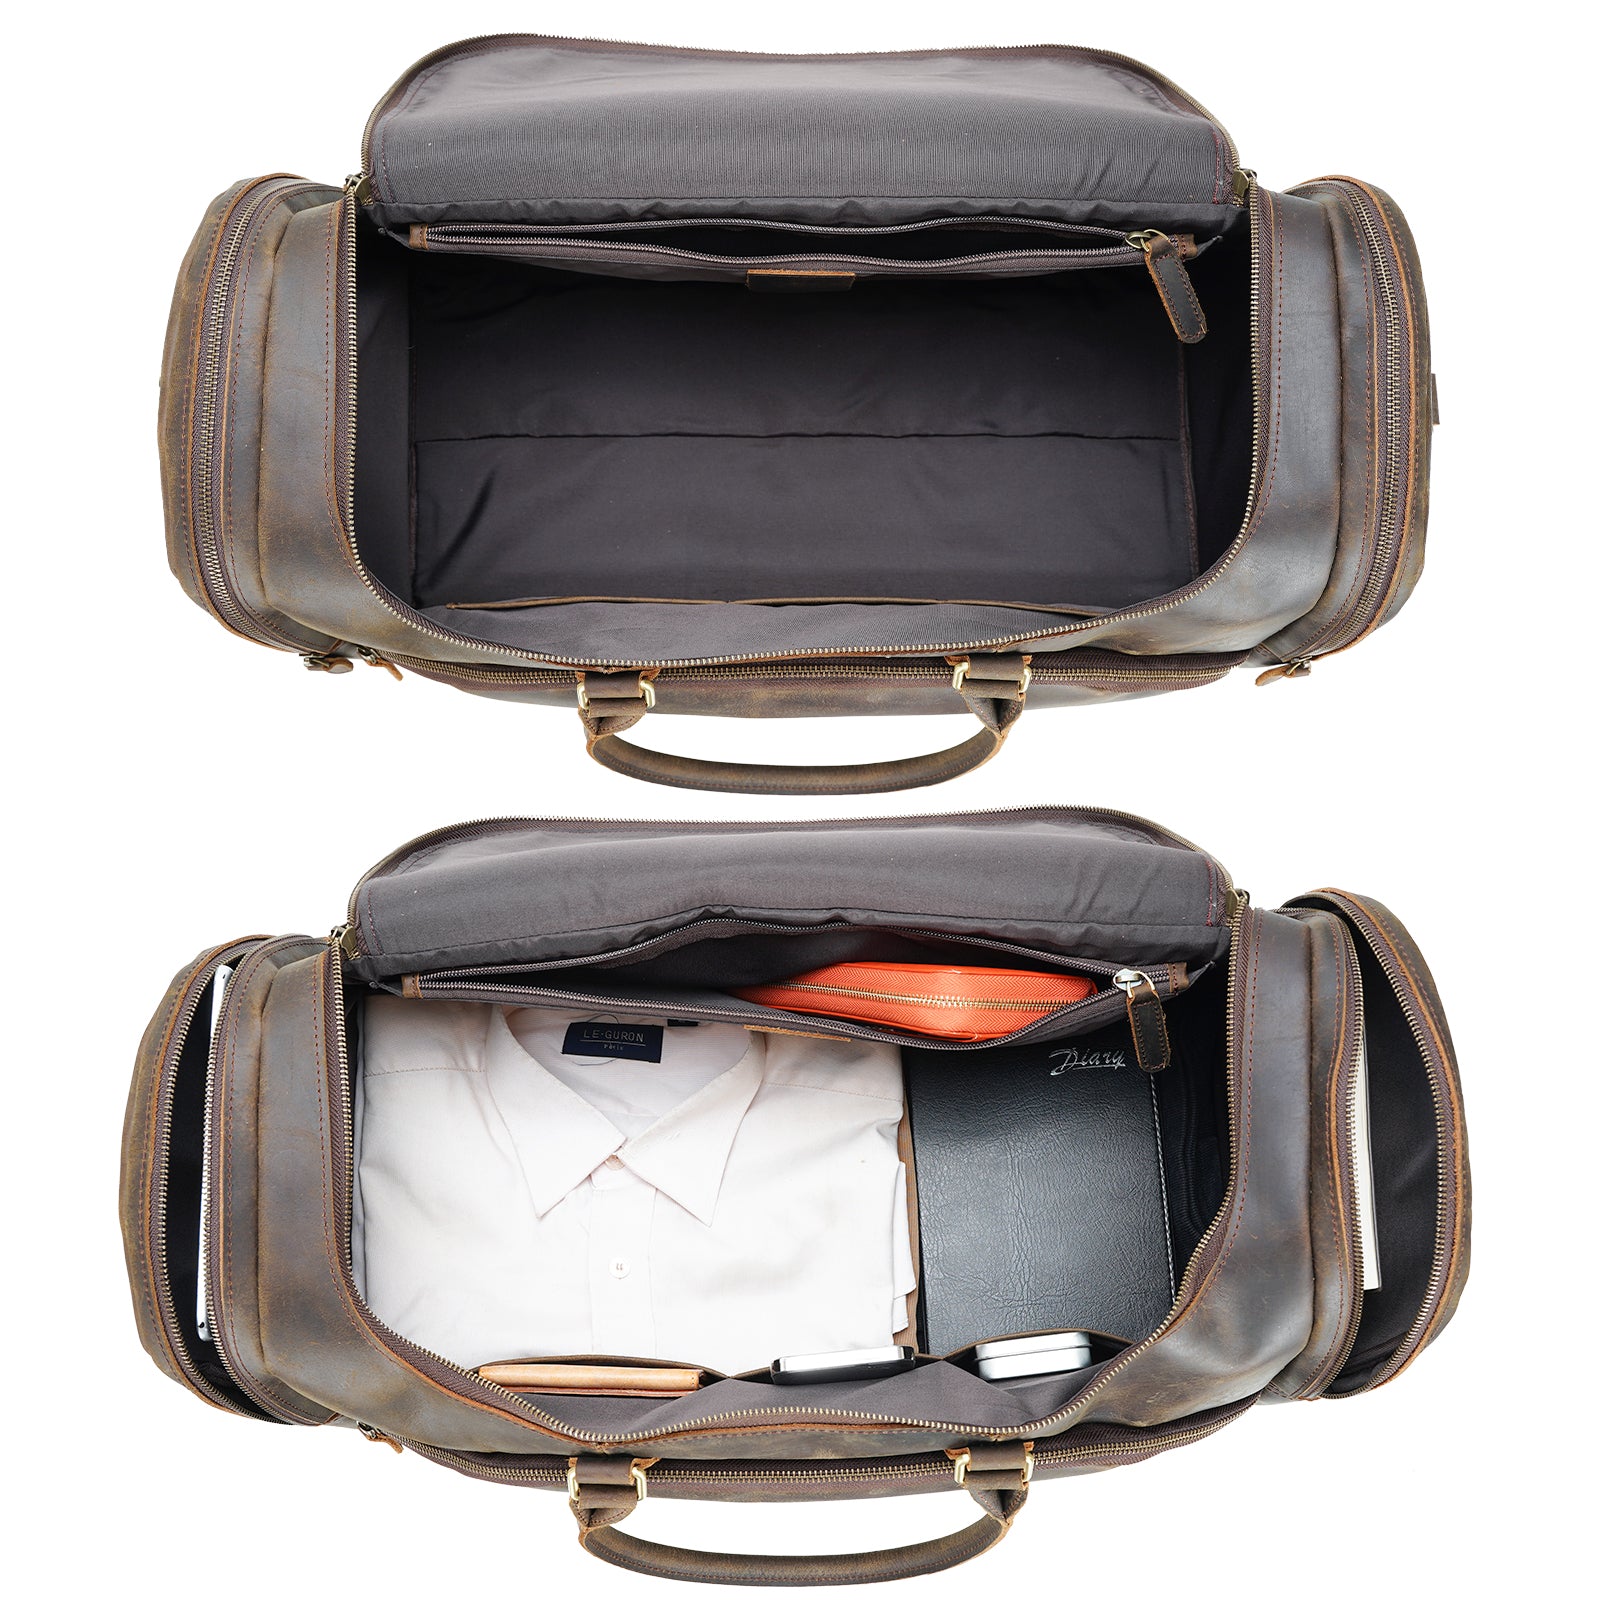 Polare 23" Full Grain Leather Vintage Duffle Weekender Overnight Travel Bag (Inside)